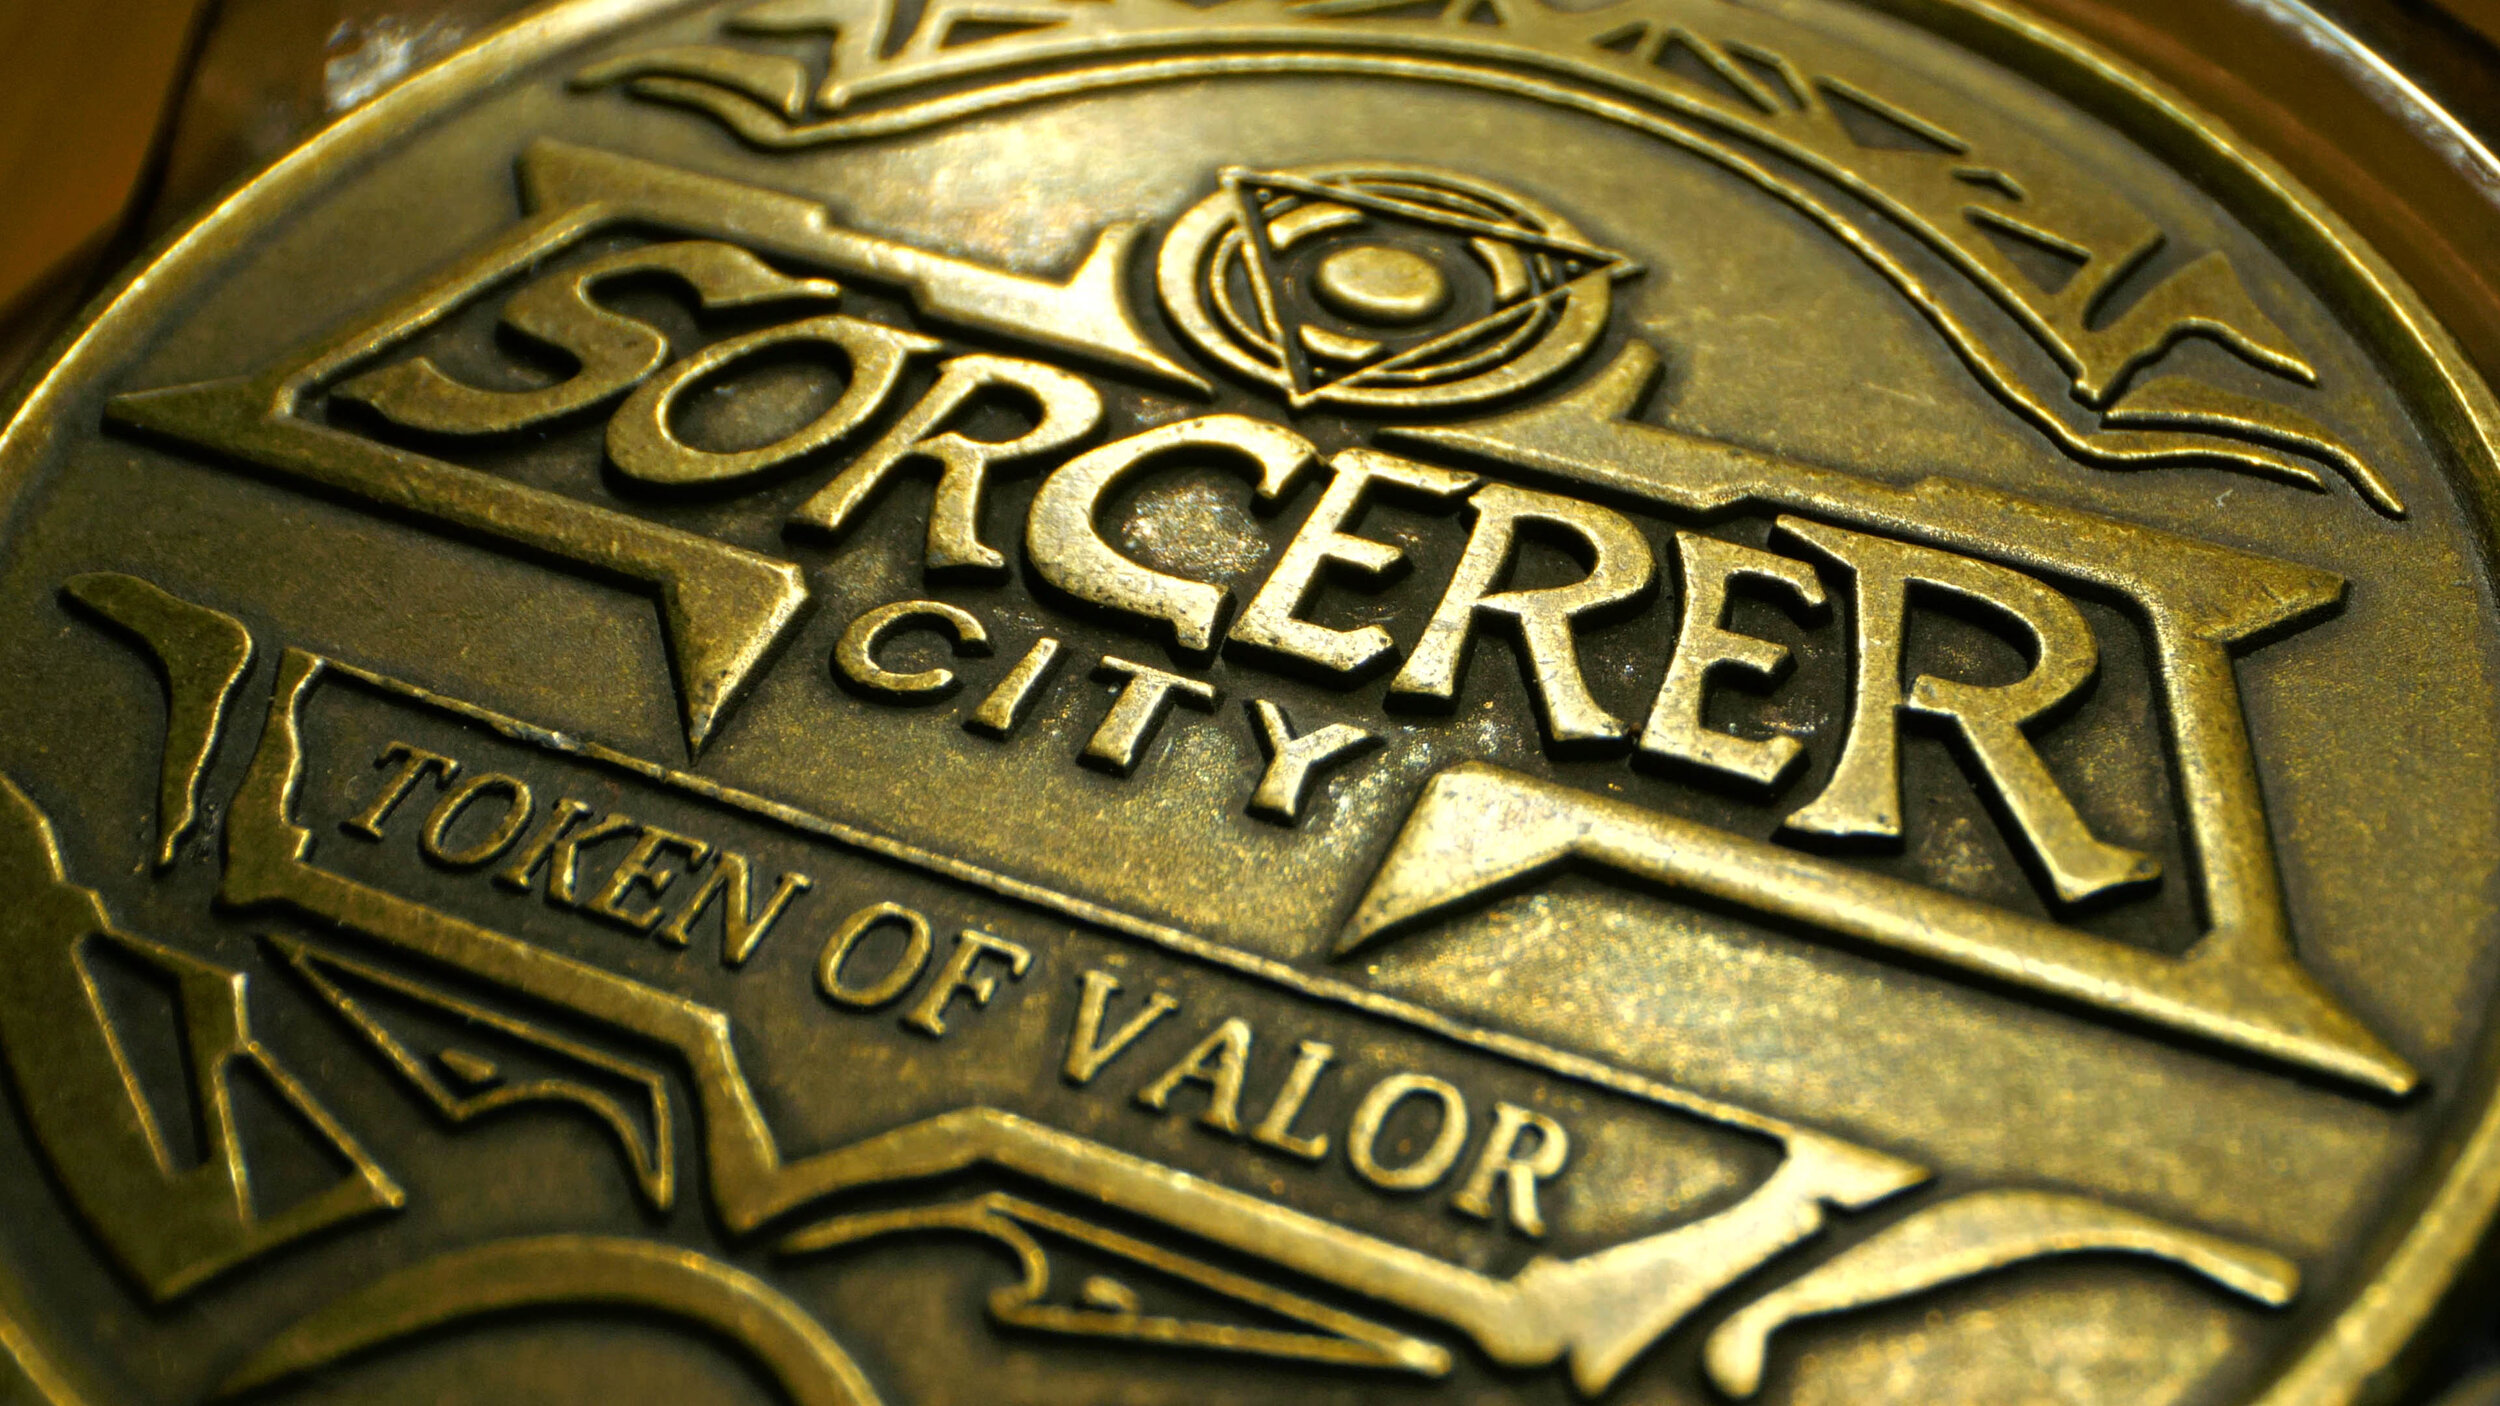 Sorcerer City Coins small.jpg